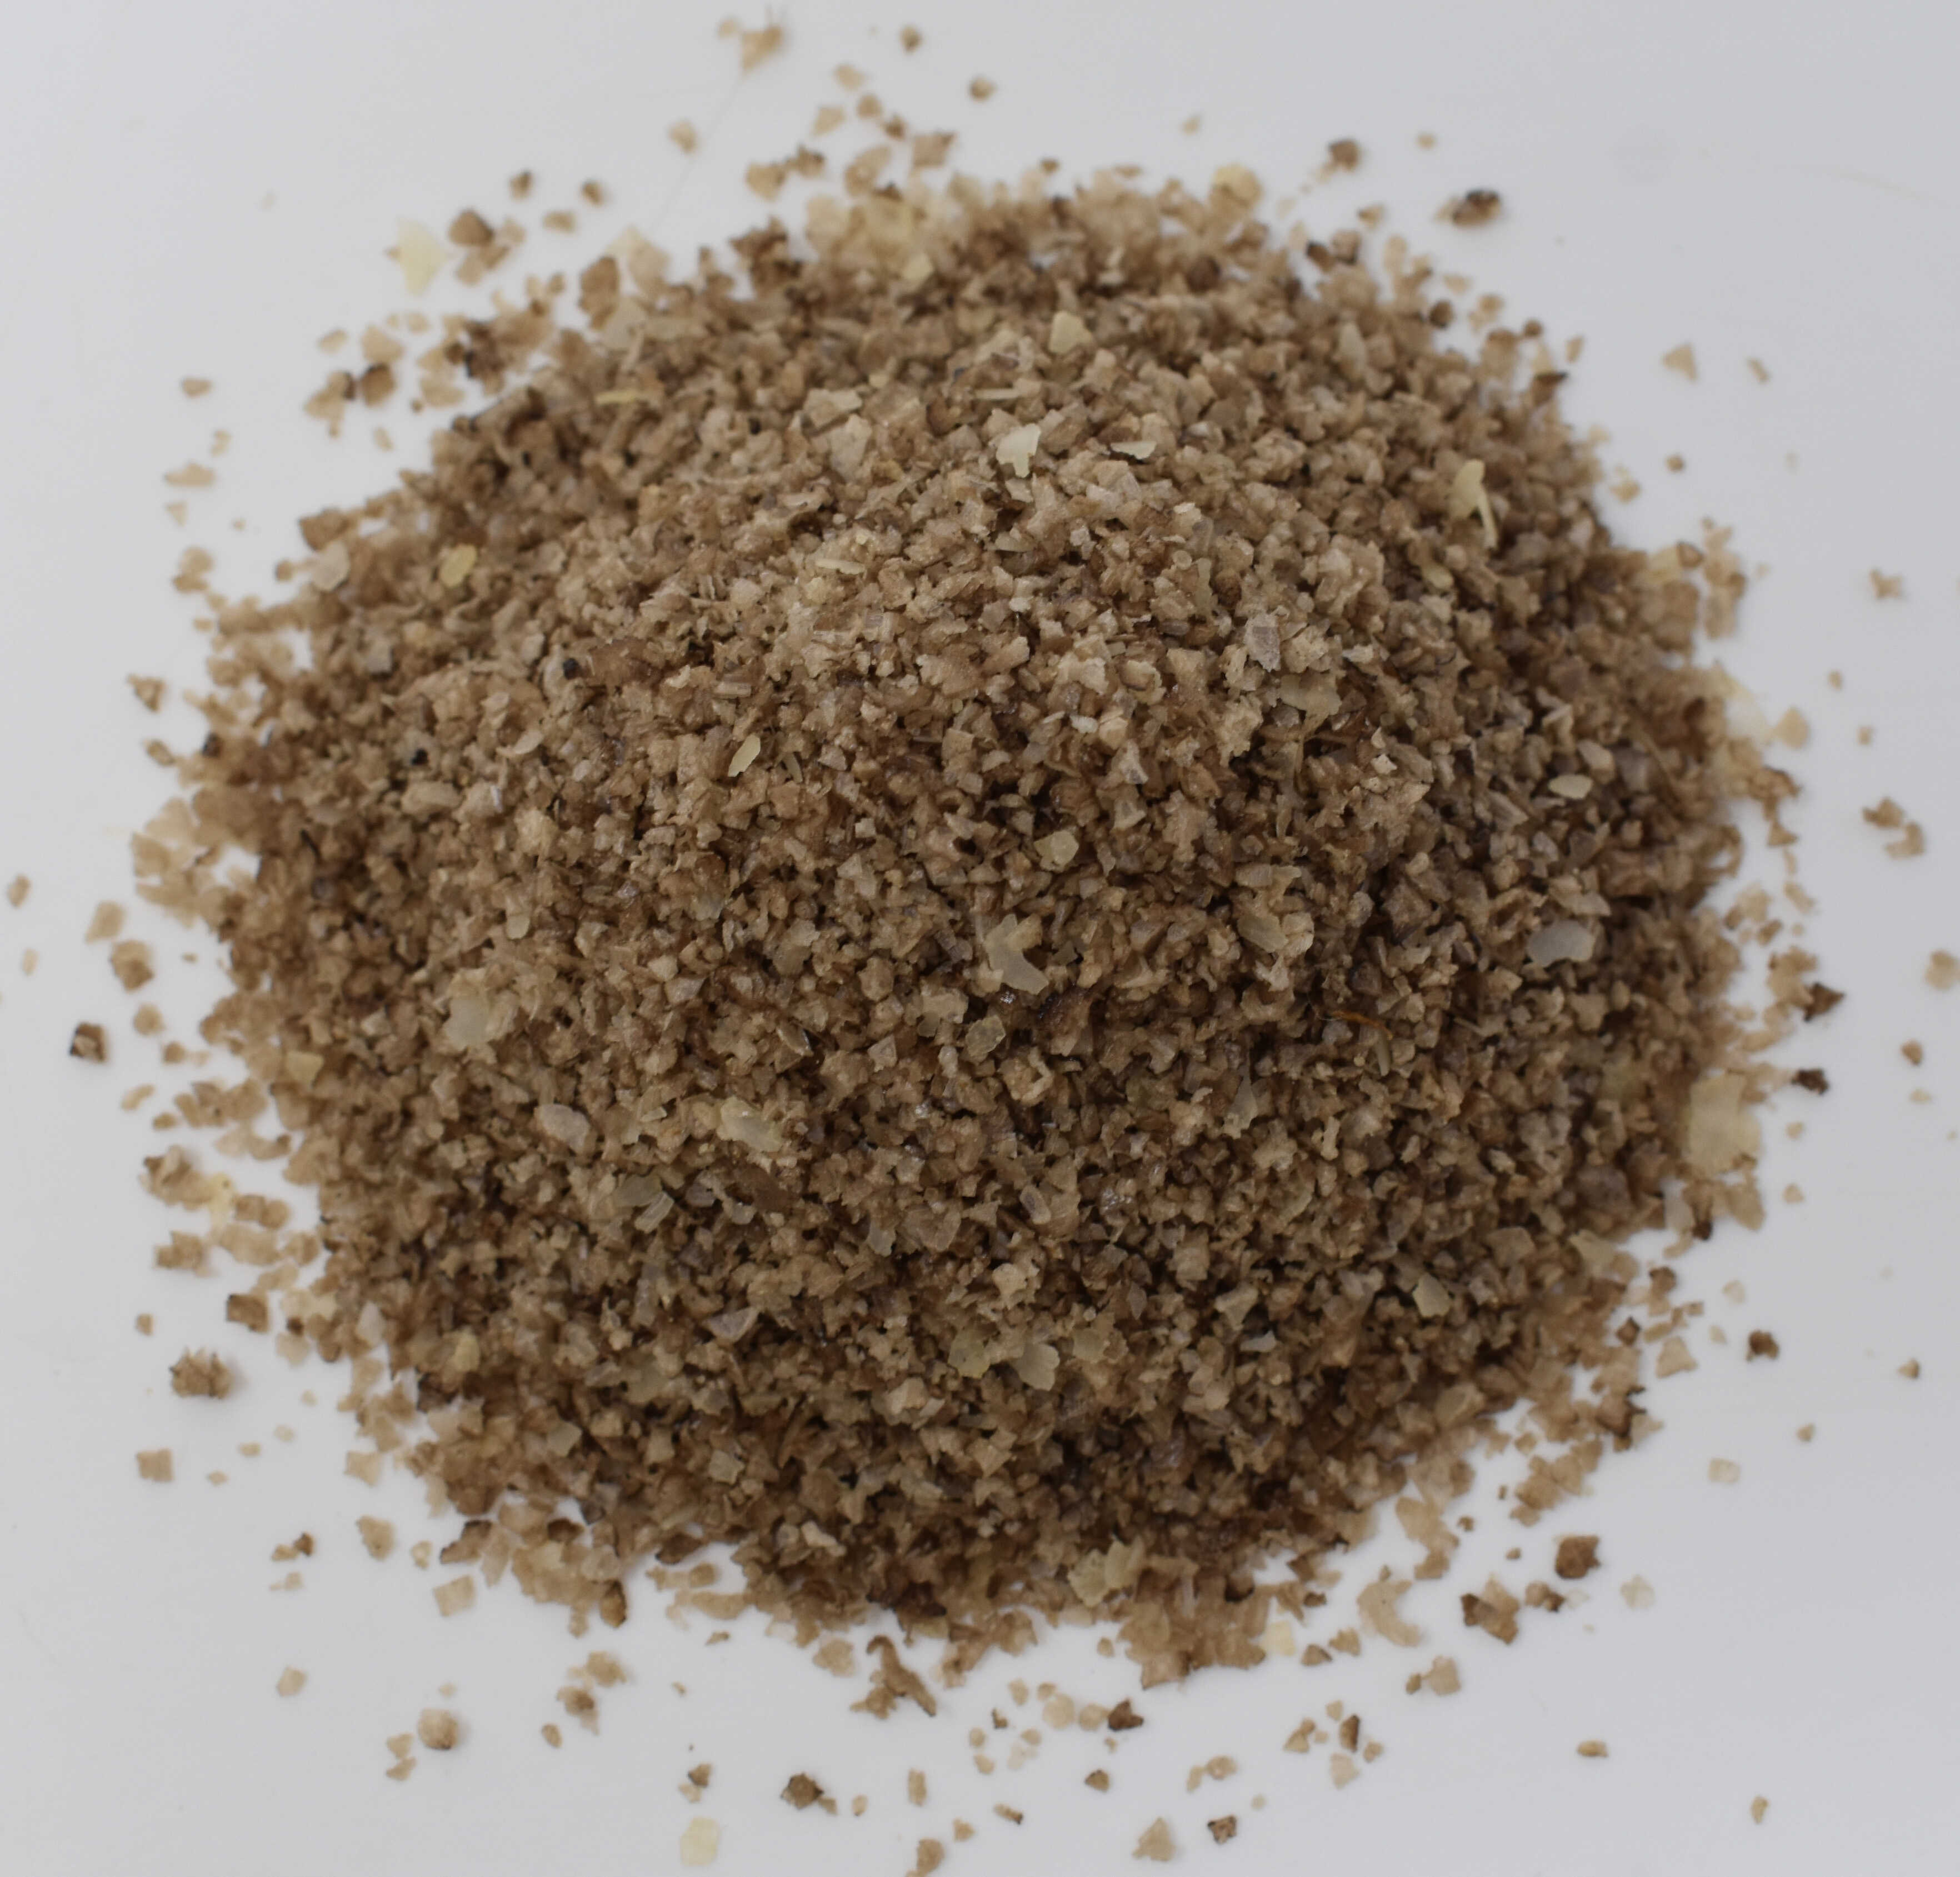 Applewood Smoked Salt - Top Photo